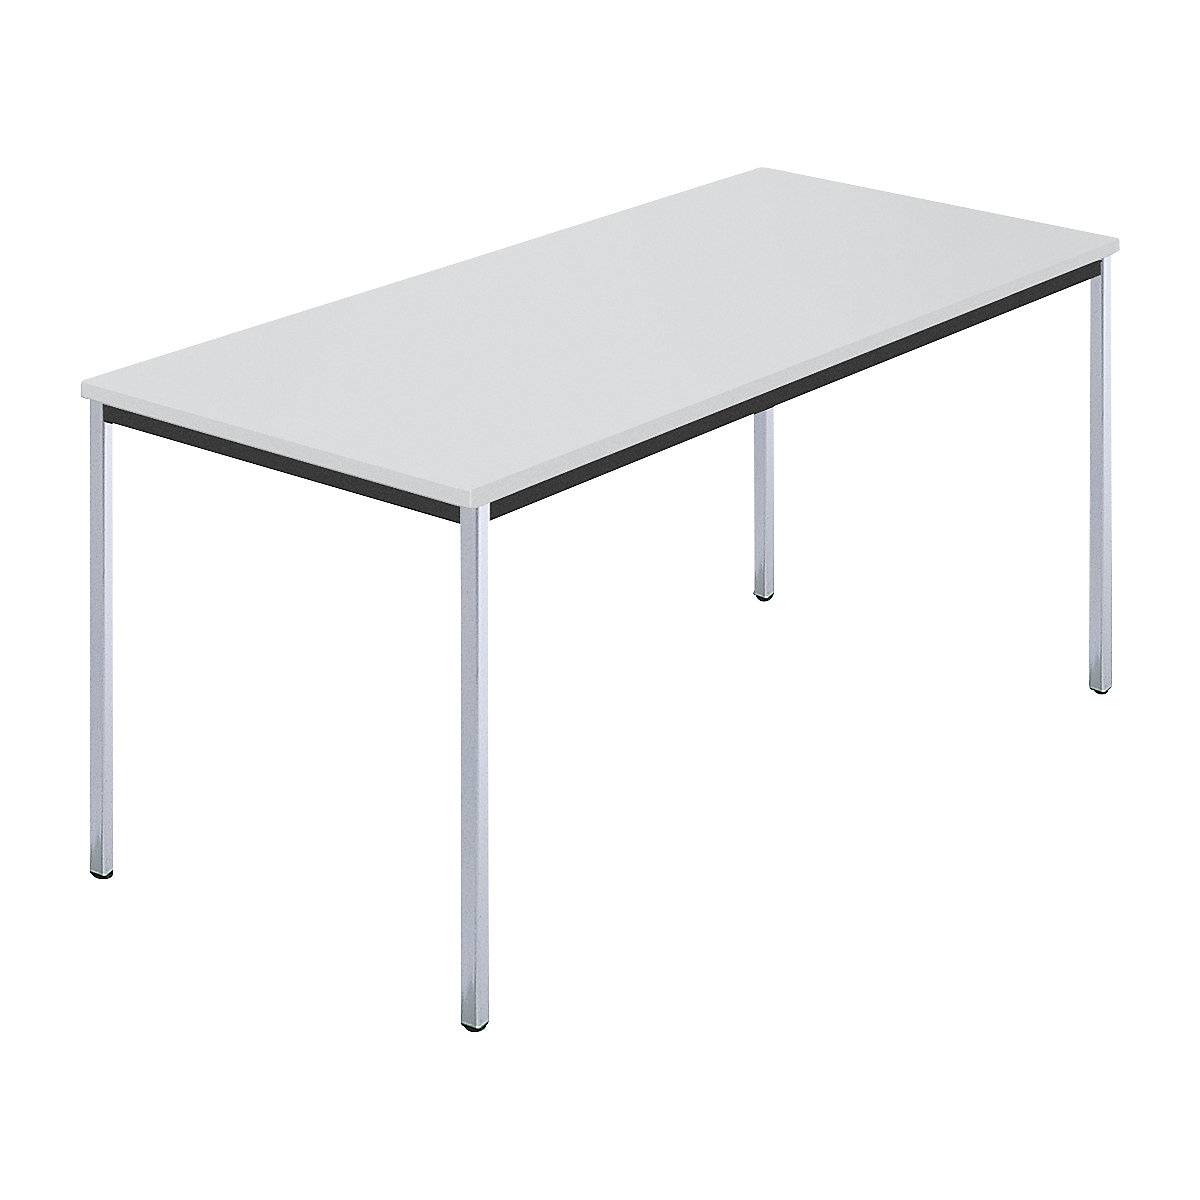 Obdélníkový stůl, čtyřhranná trubka pochromovaná, š x h 1500 x 800 mm, šedá-6